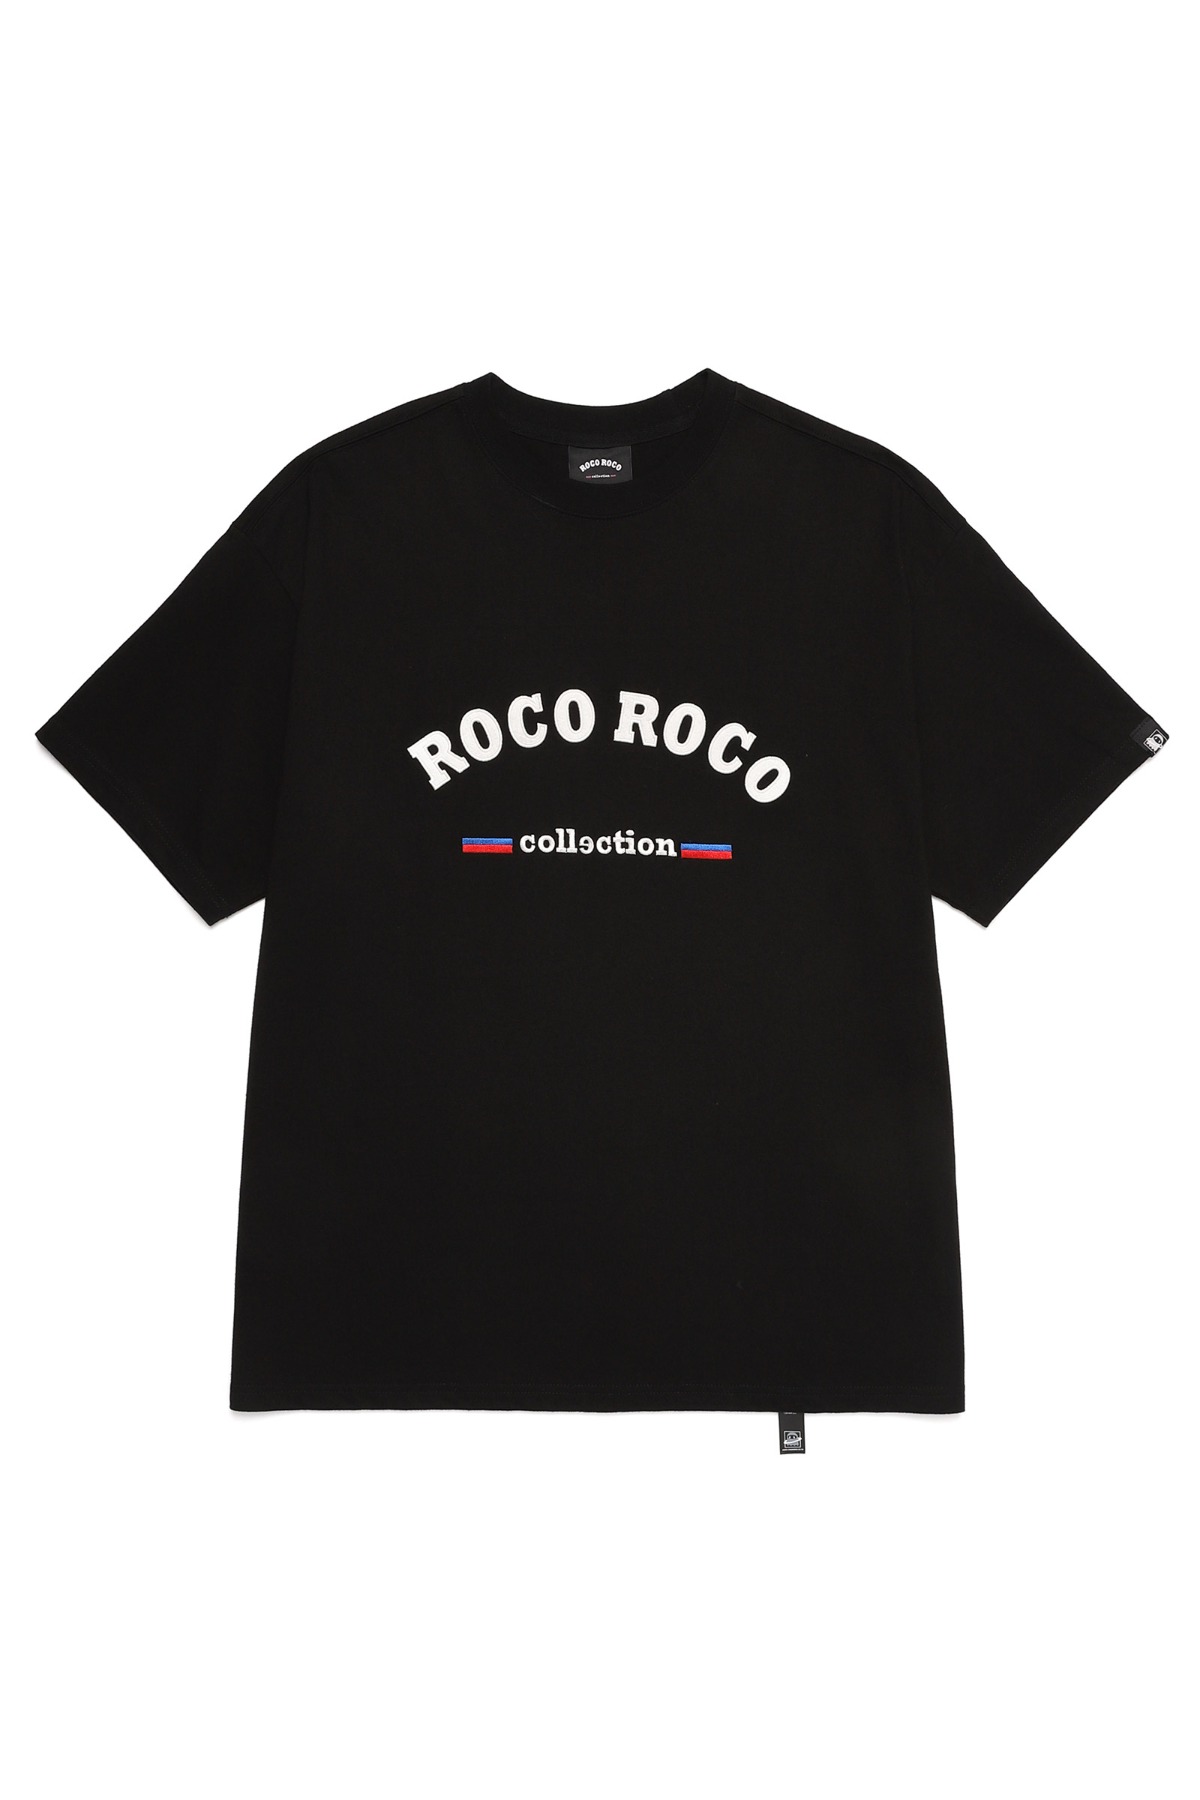 BASIC ROCO T black